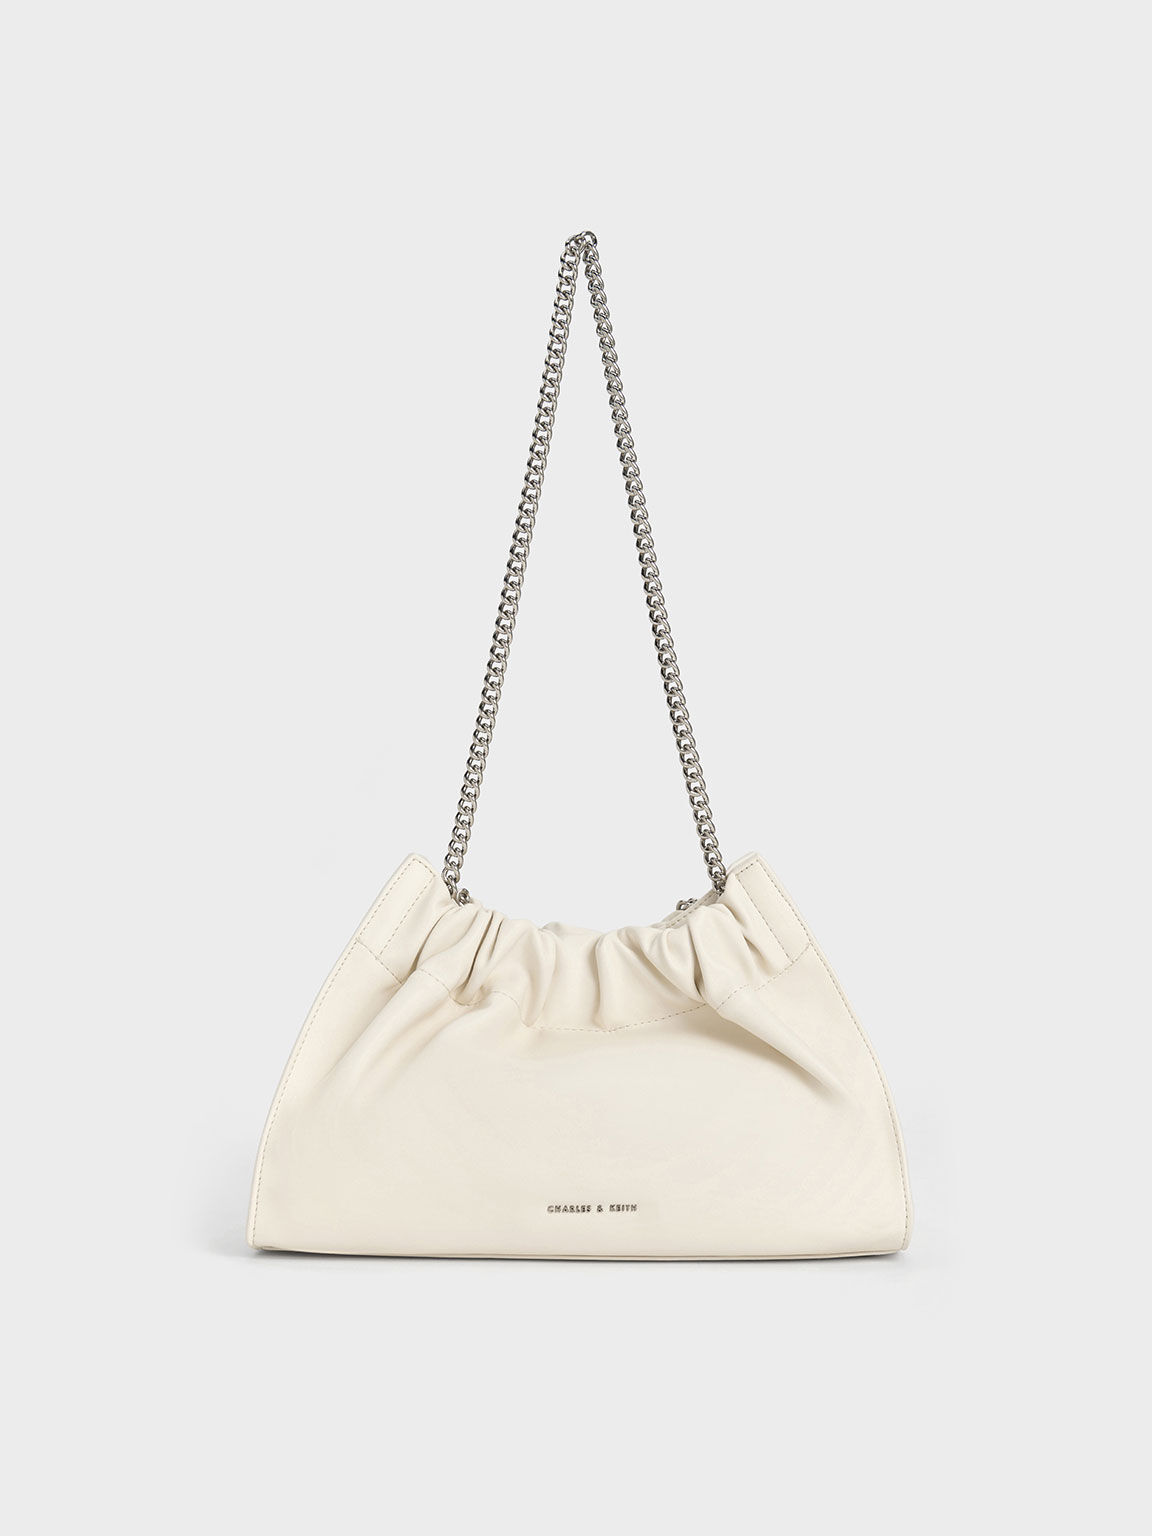 Cyrus Slouchy Chain-Handle Bag, Cream, hi-res